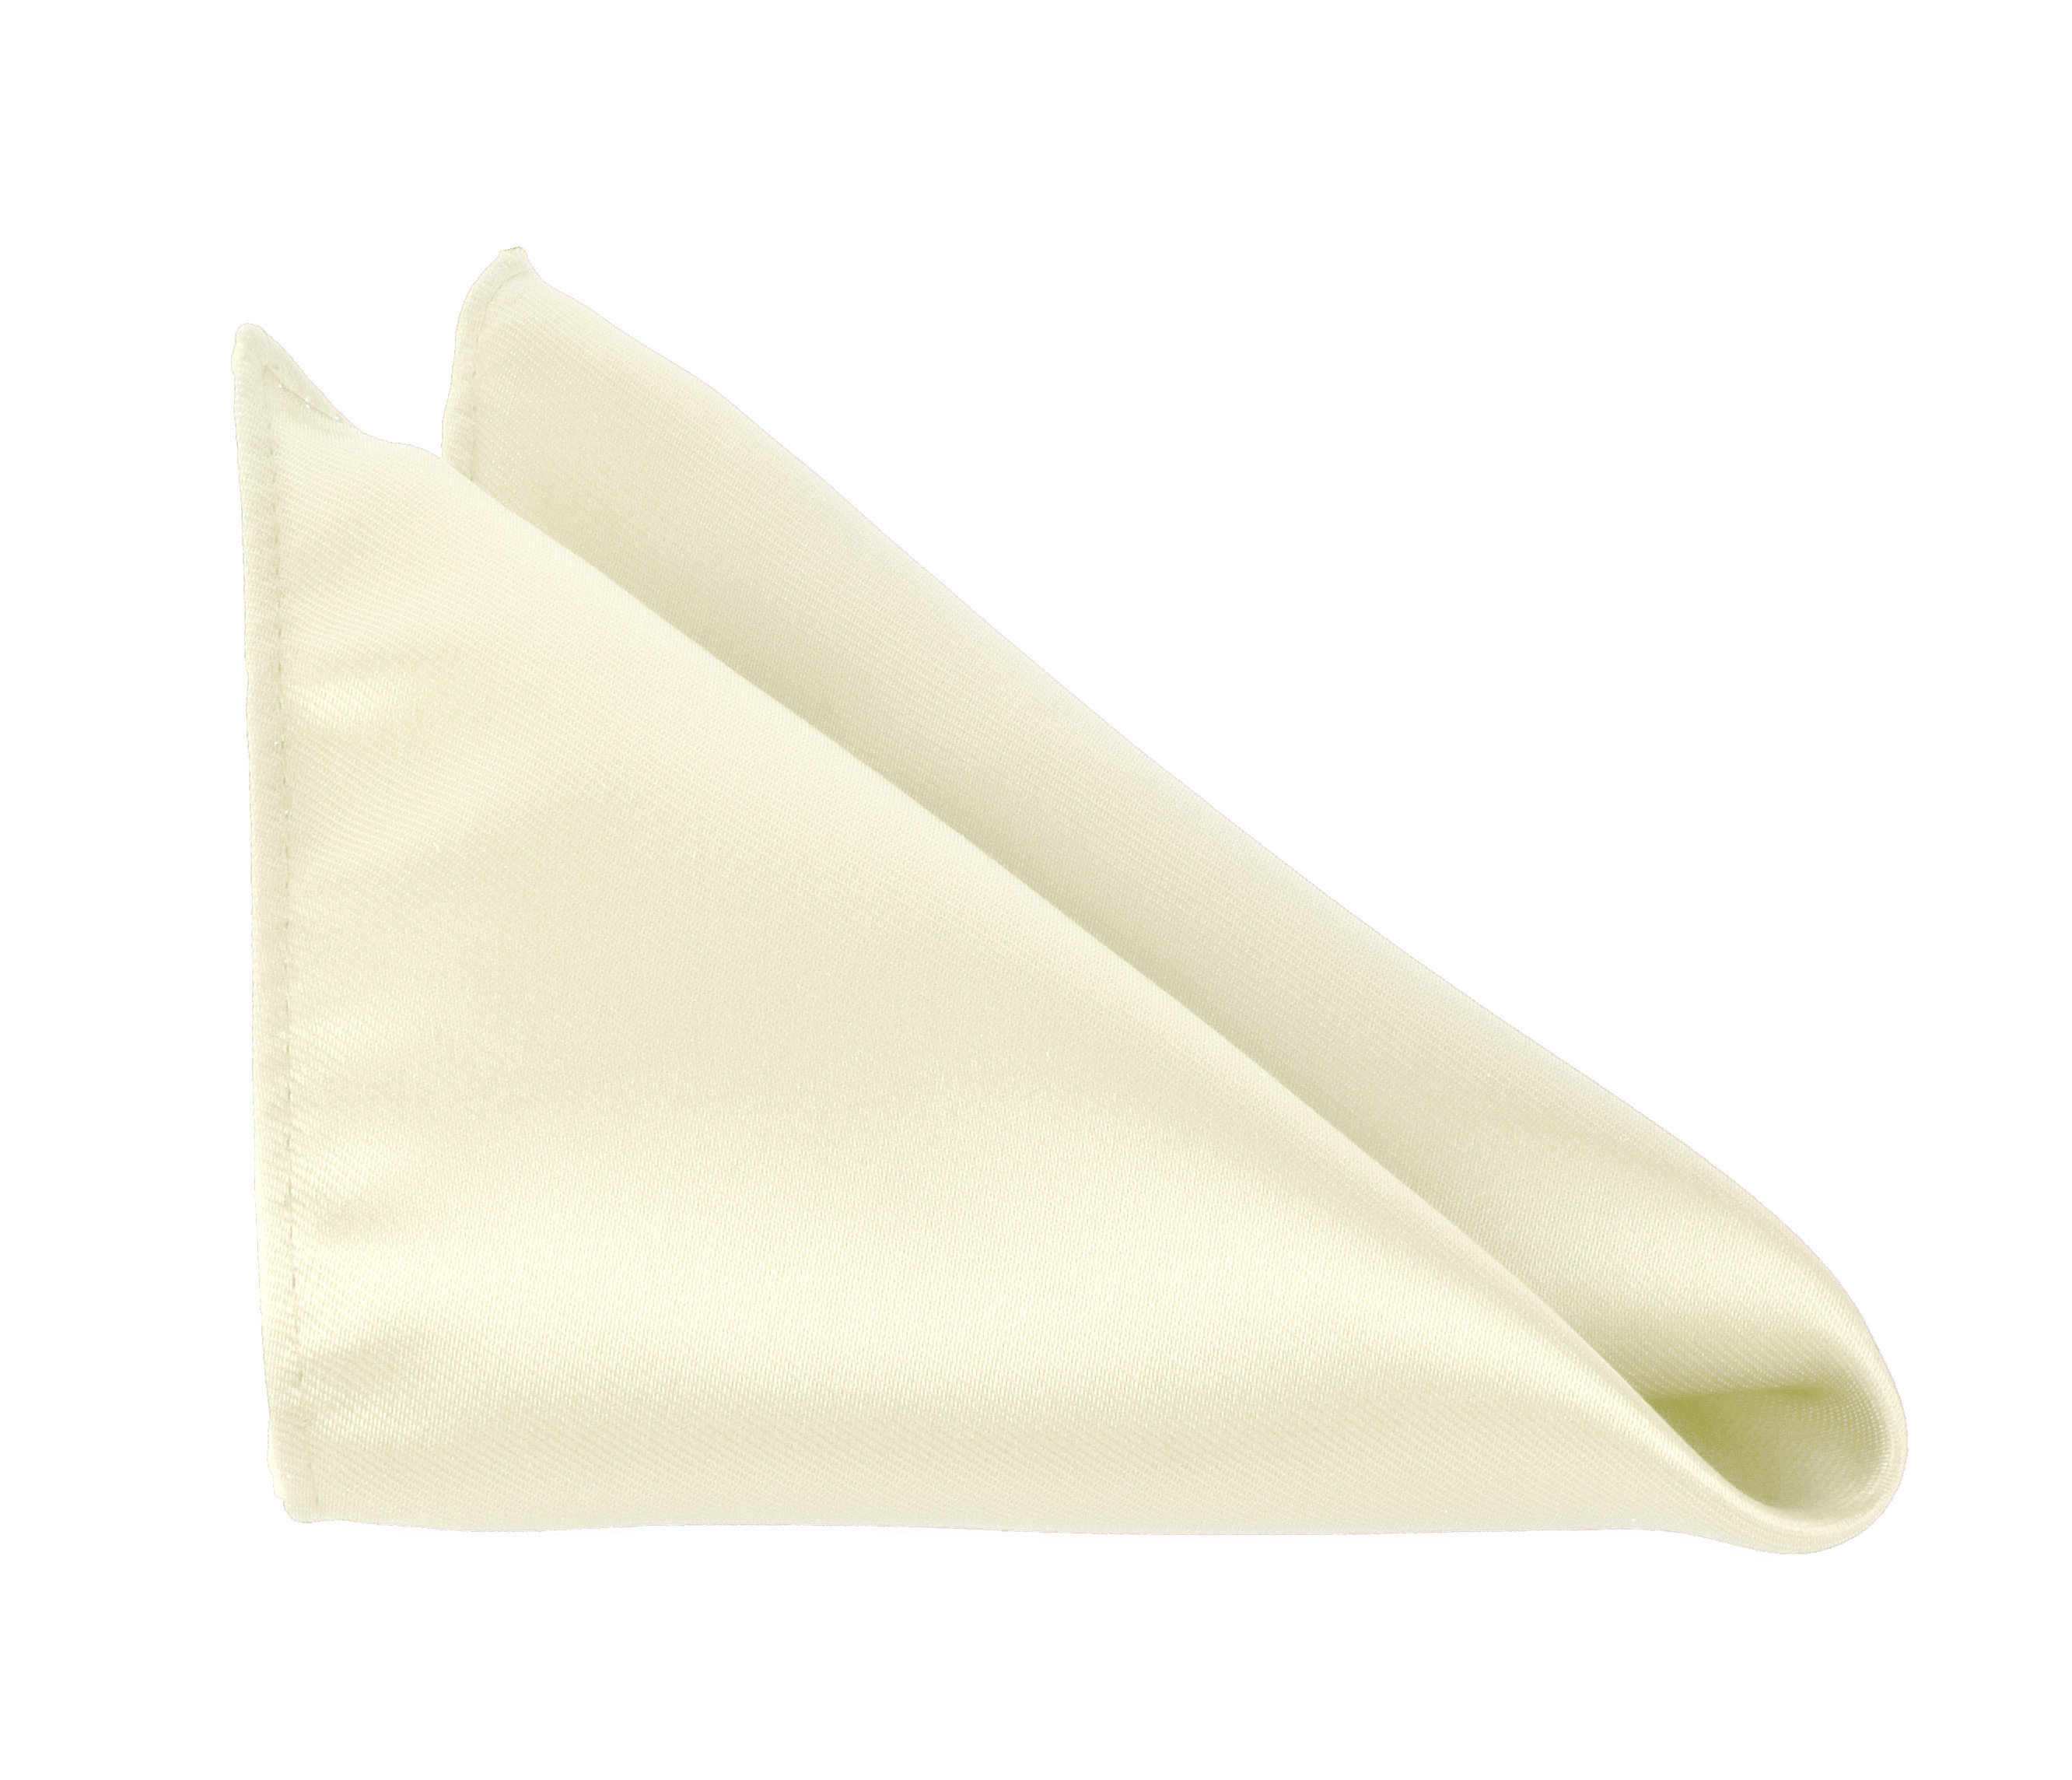 Moda Di Raza Pocket Square Handkerchief 10 x 10 Hanky Satin Finish| Pocket Square for Men| - Ivory Cream